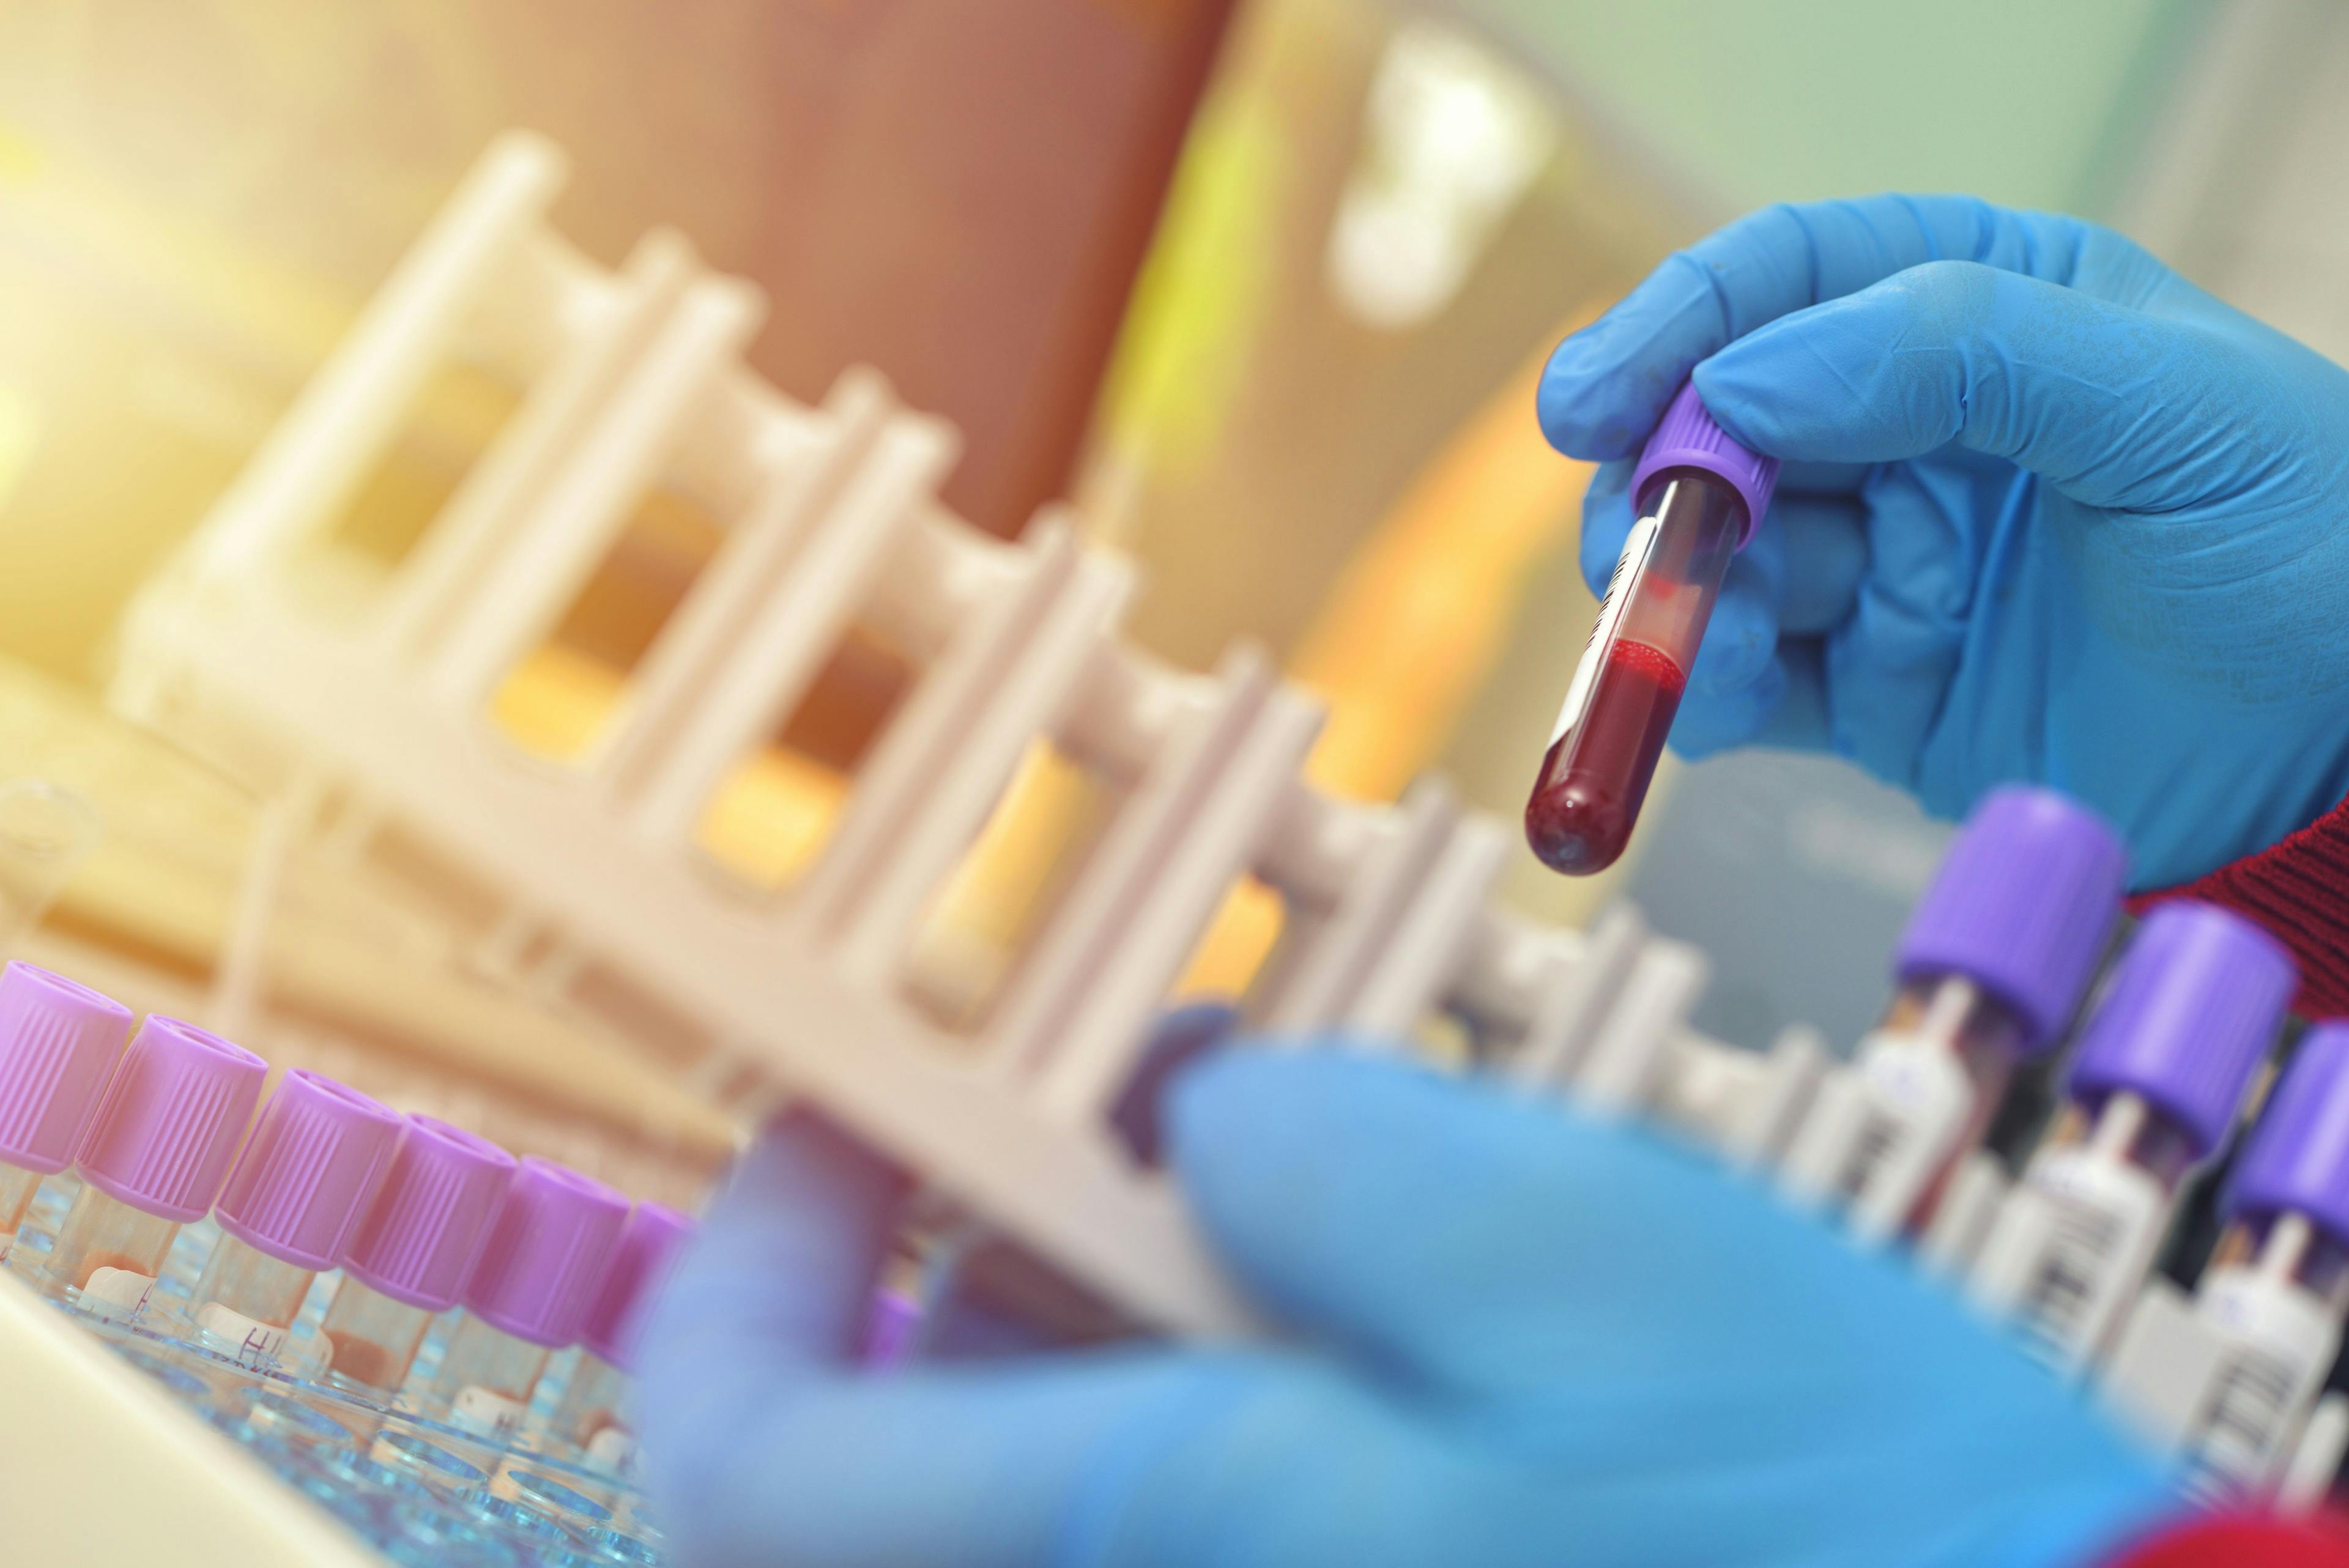 blood samples | Image credit: Daniel CHETRONI – stock.adobe.com